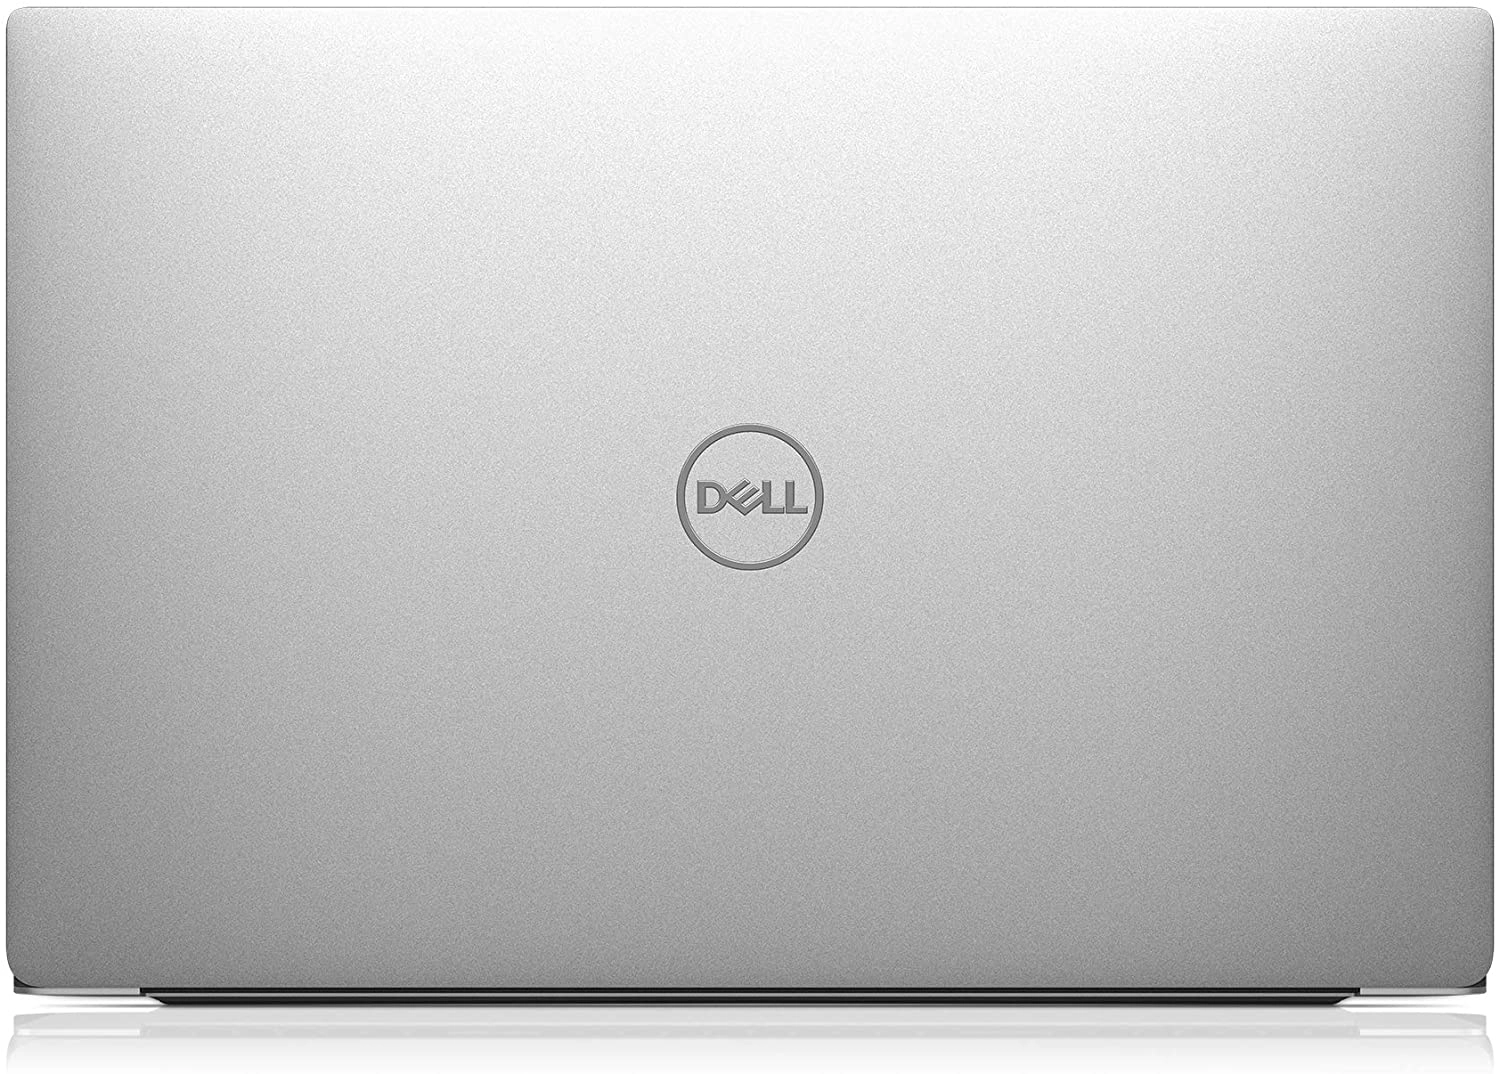 Dell XPS 15 7590 laptop image